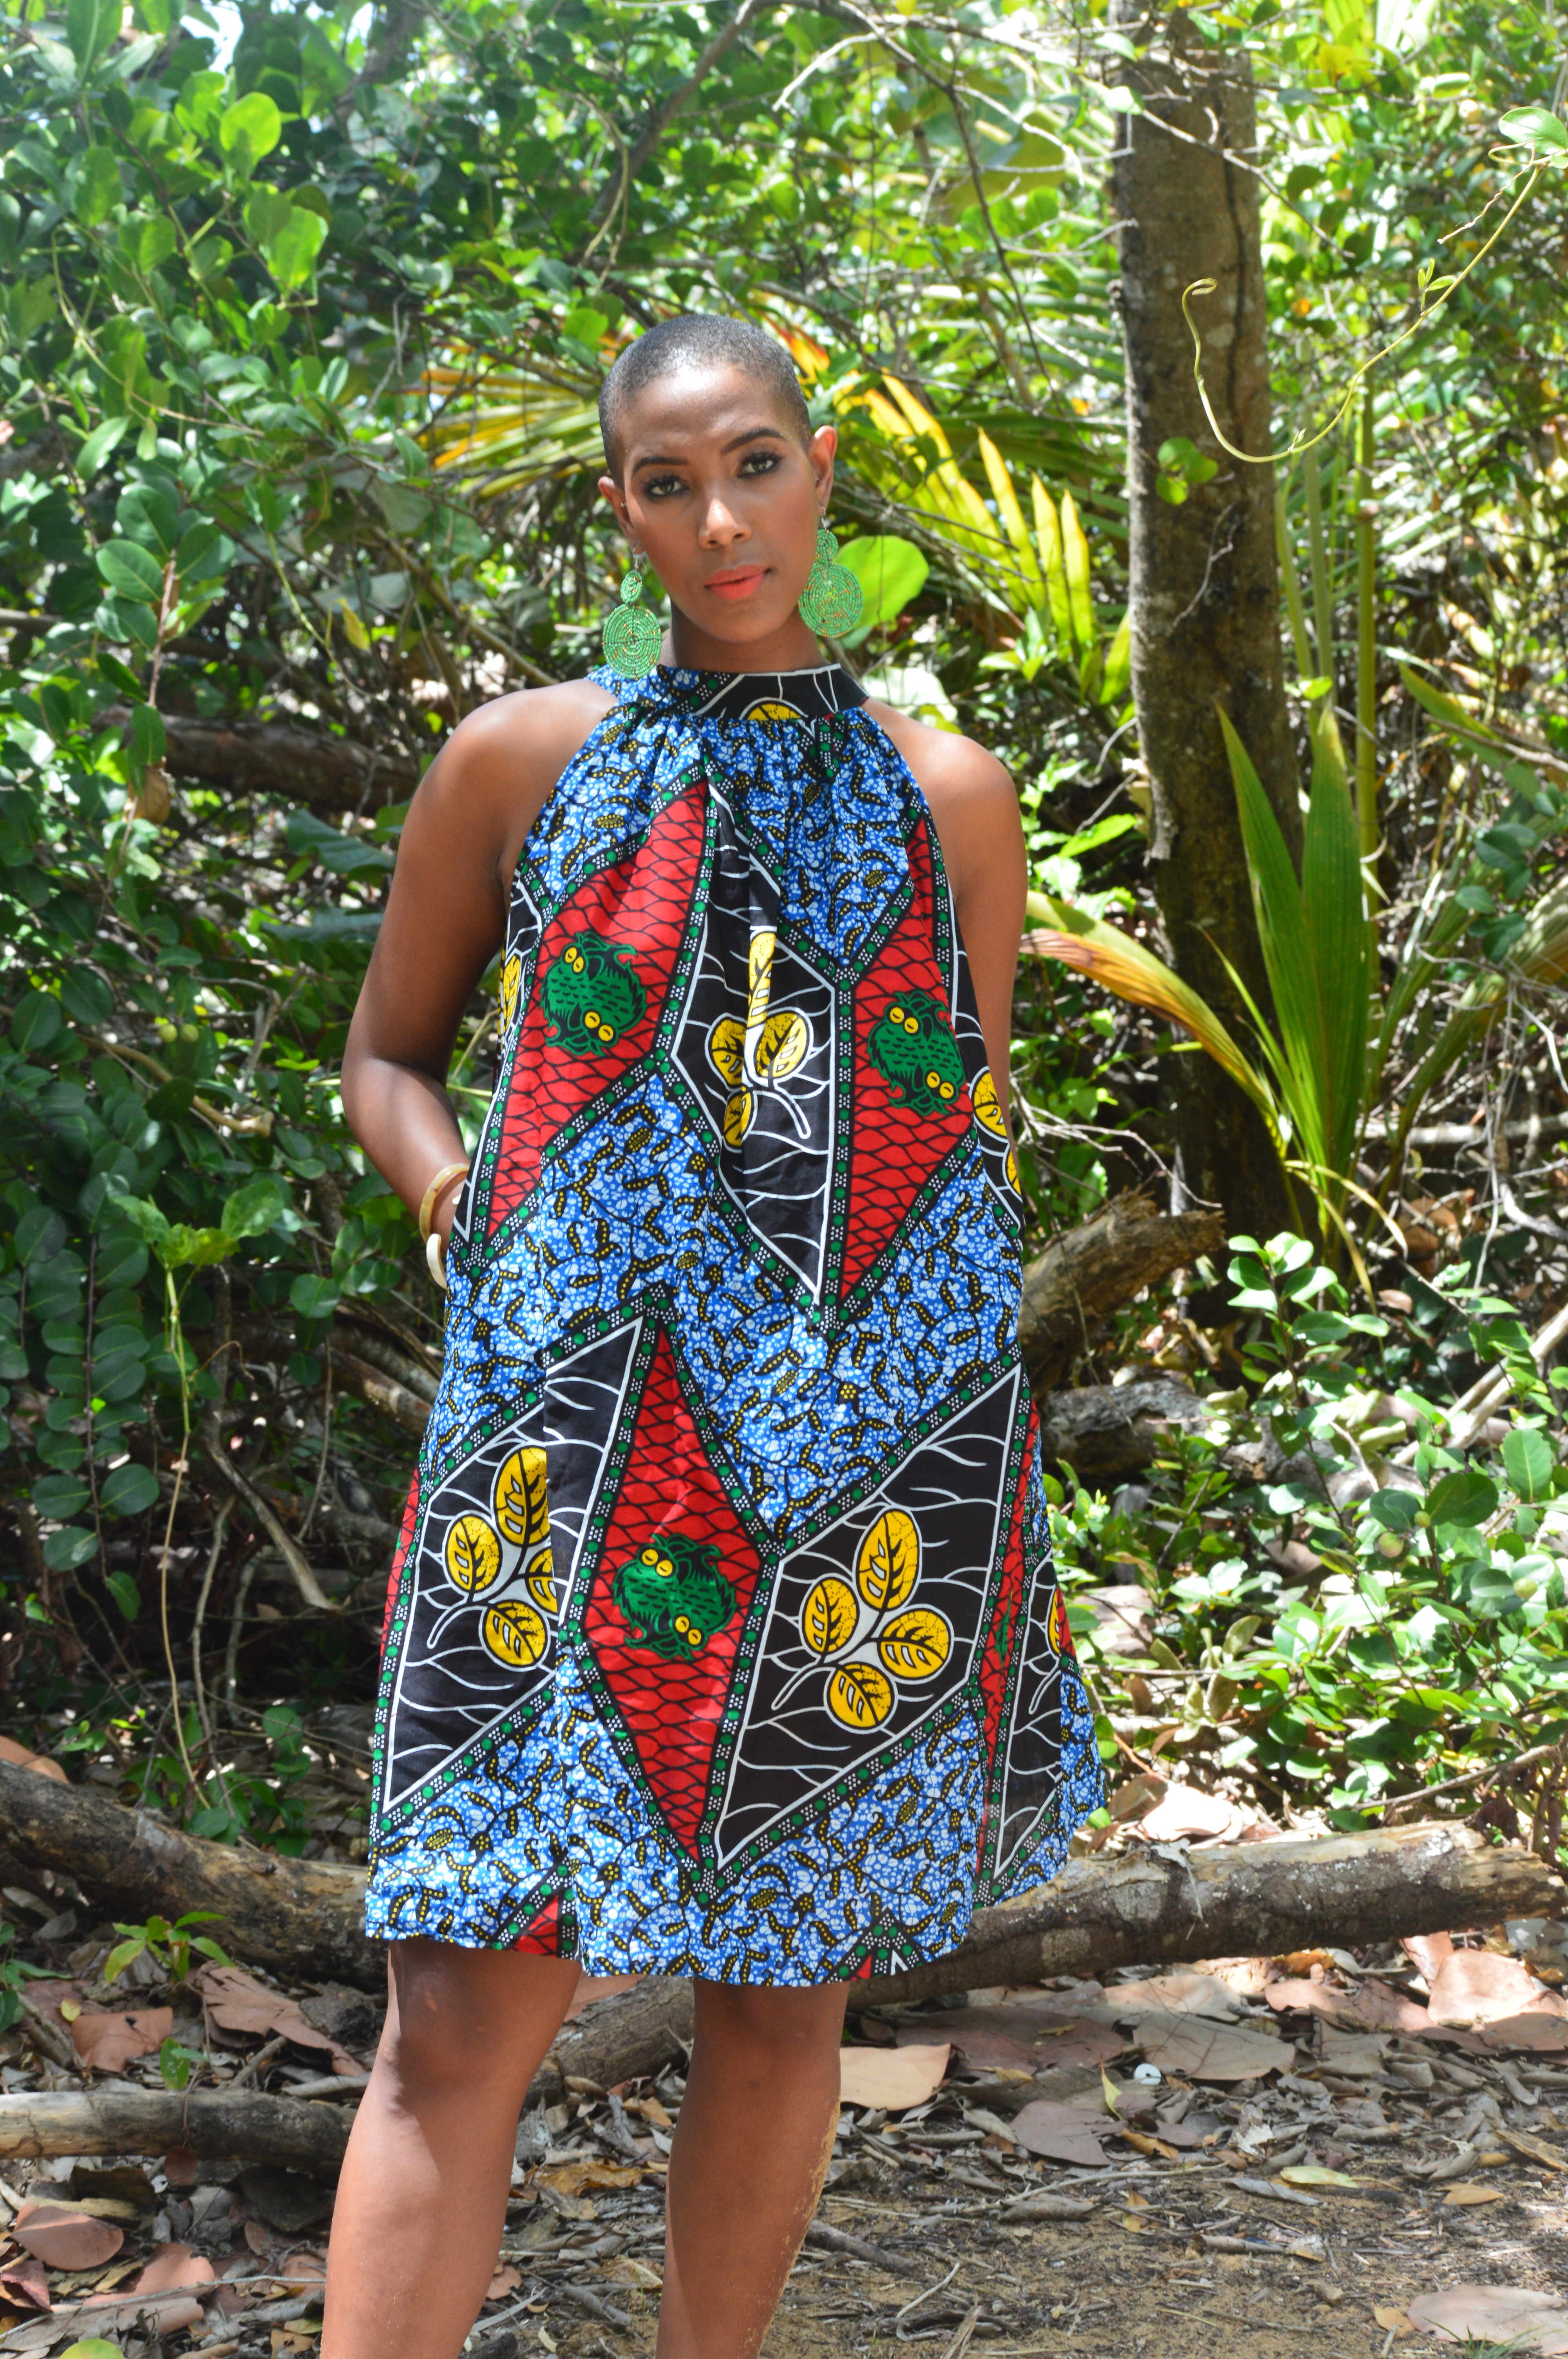 fashions of kitenge dresses